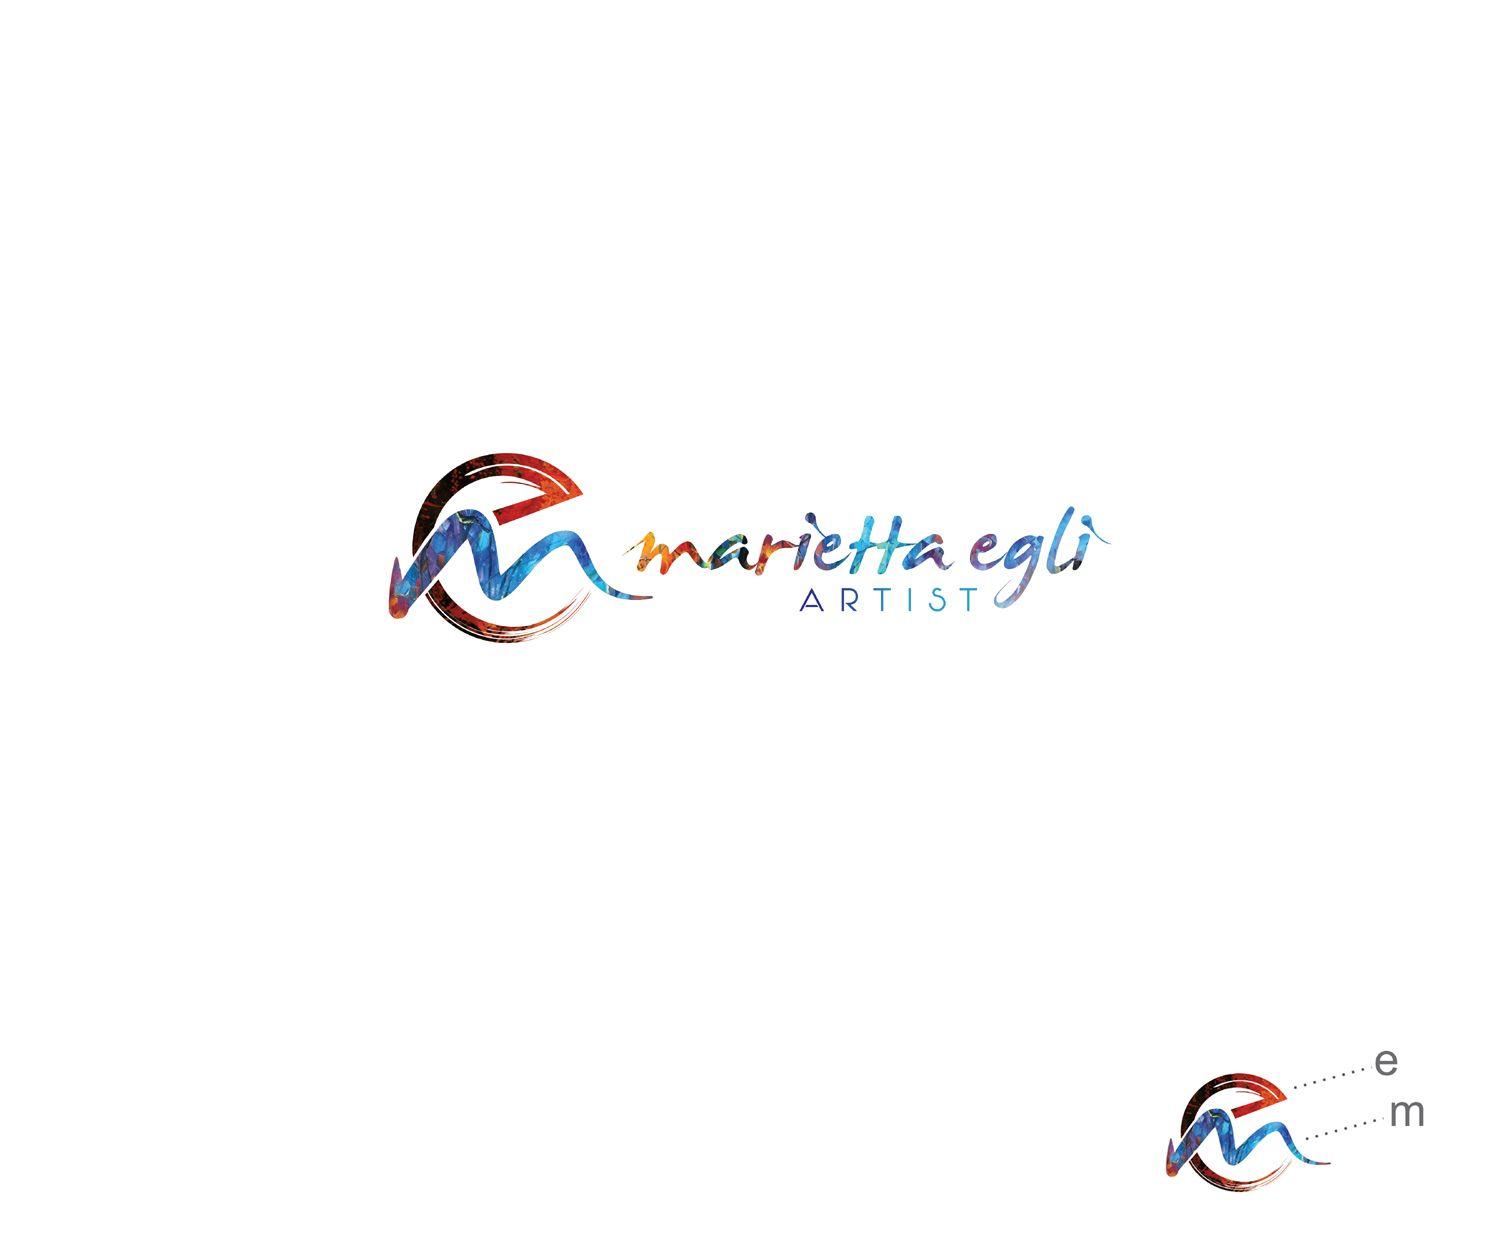 Marietta Company Logo - Modern, Playful Logo Design for Marietta Egli - Artist by hifilogo ...